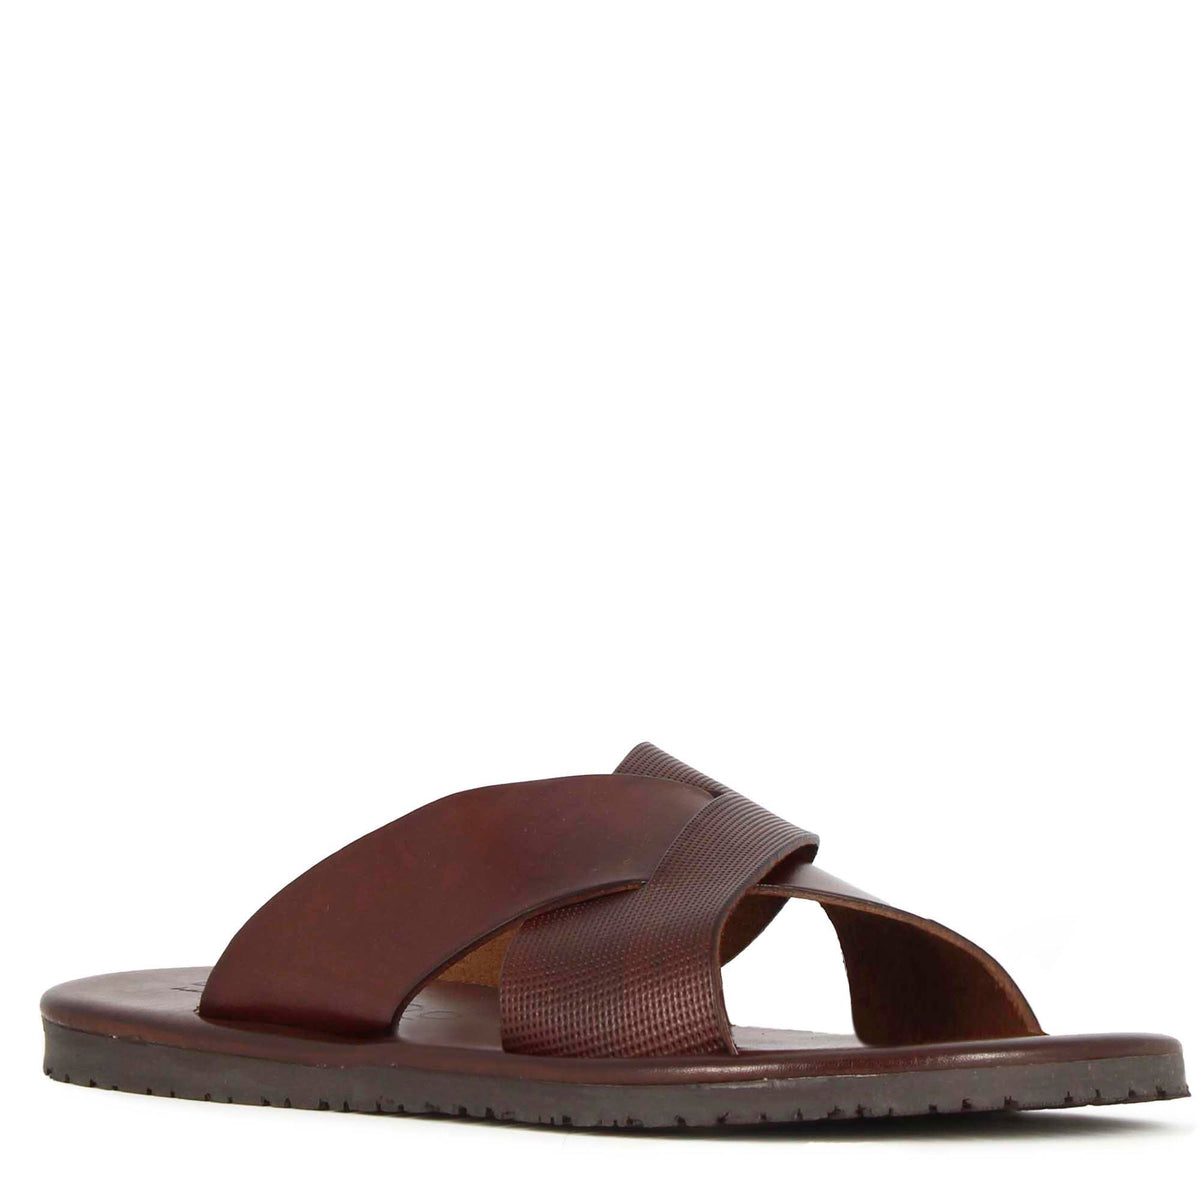 Brown leather men's cross-banded slider sandal